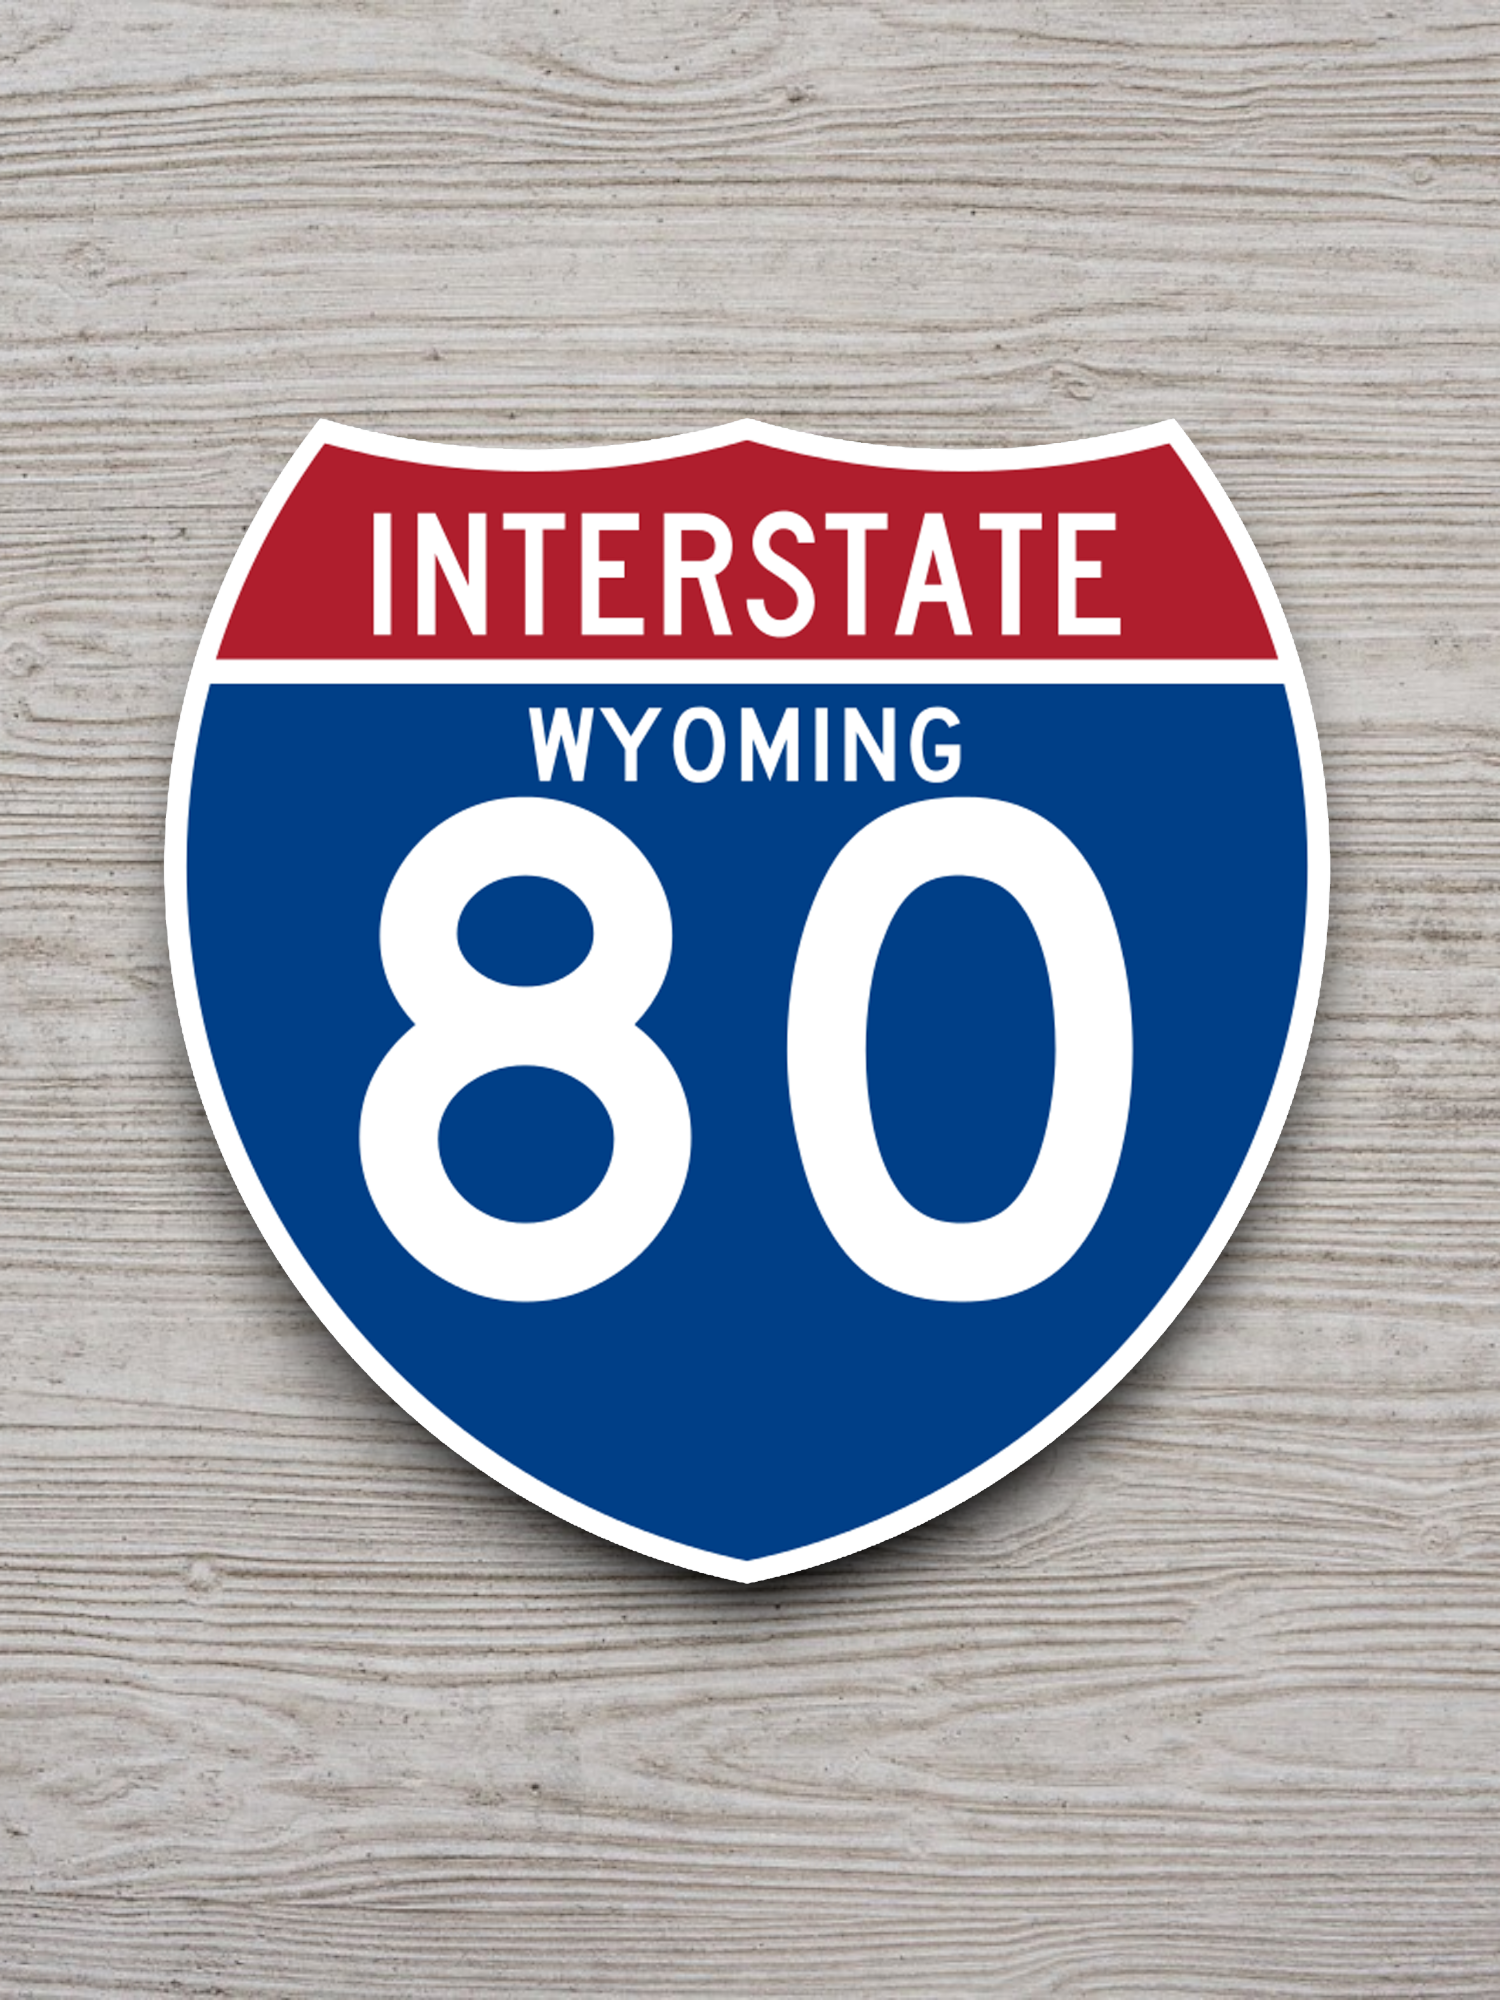 Interstate I-80 Wyoming - Road Sign Sticker